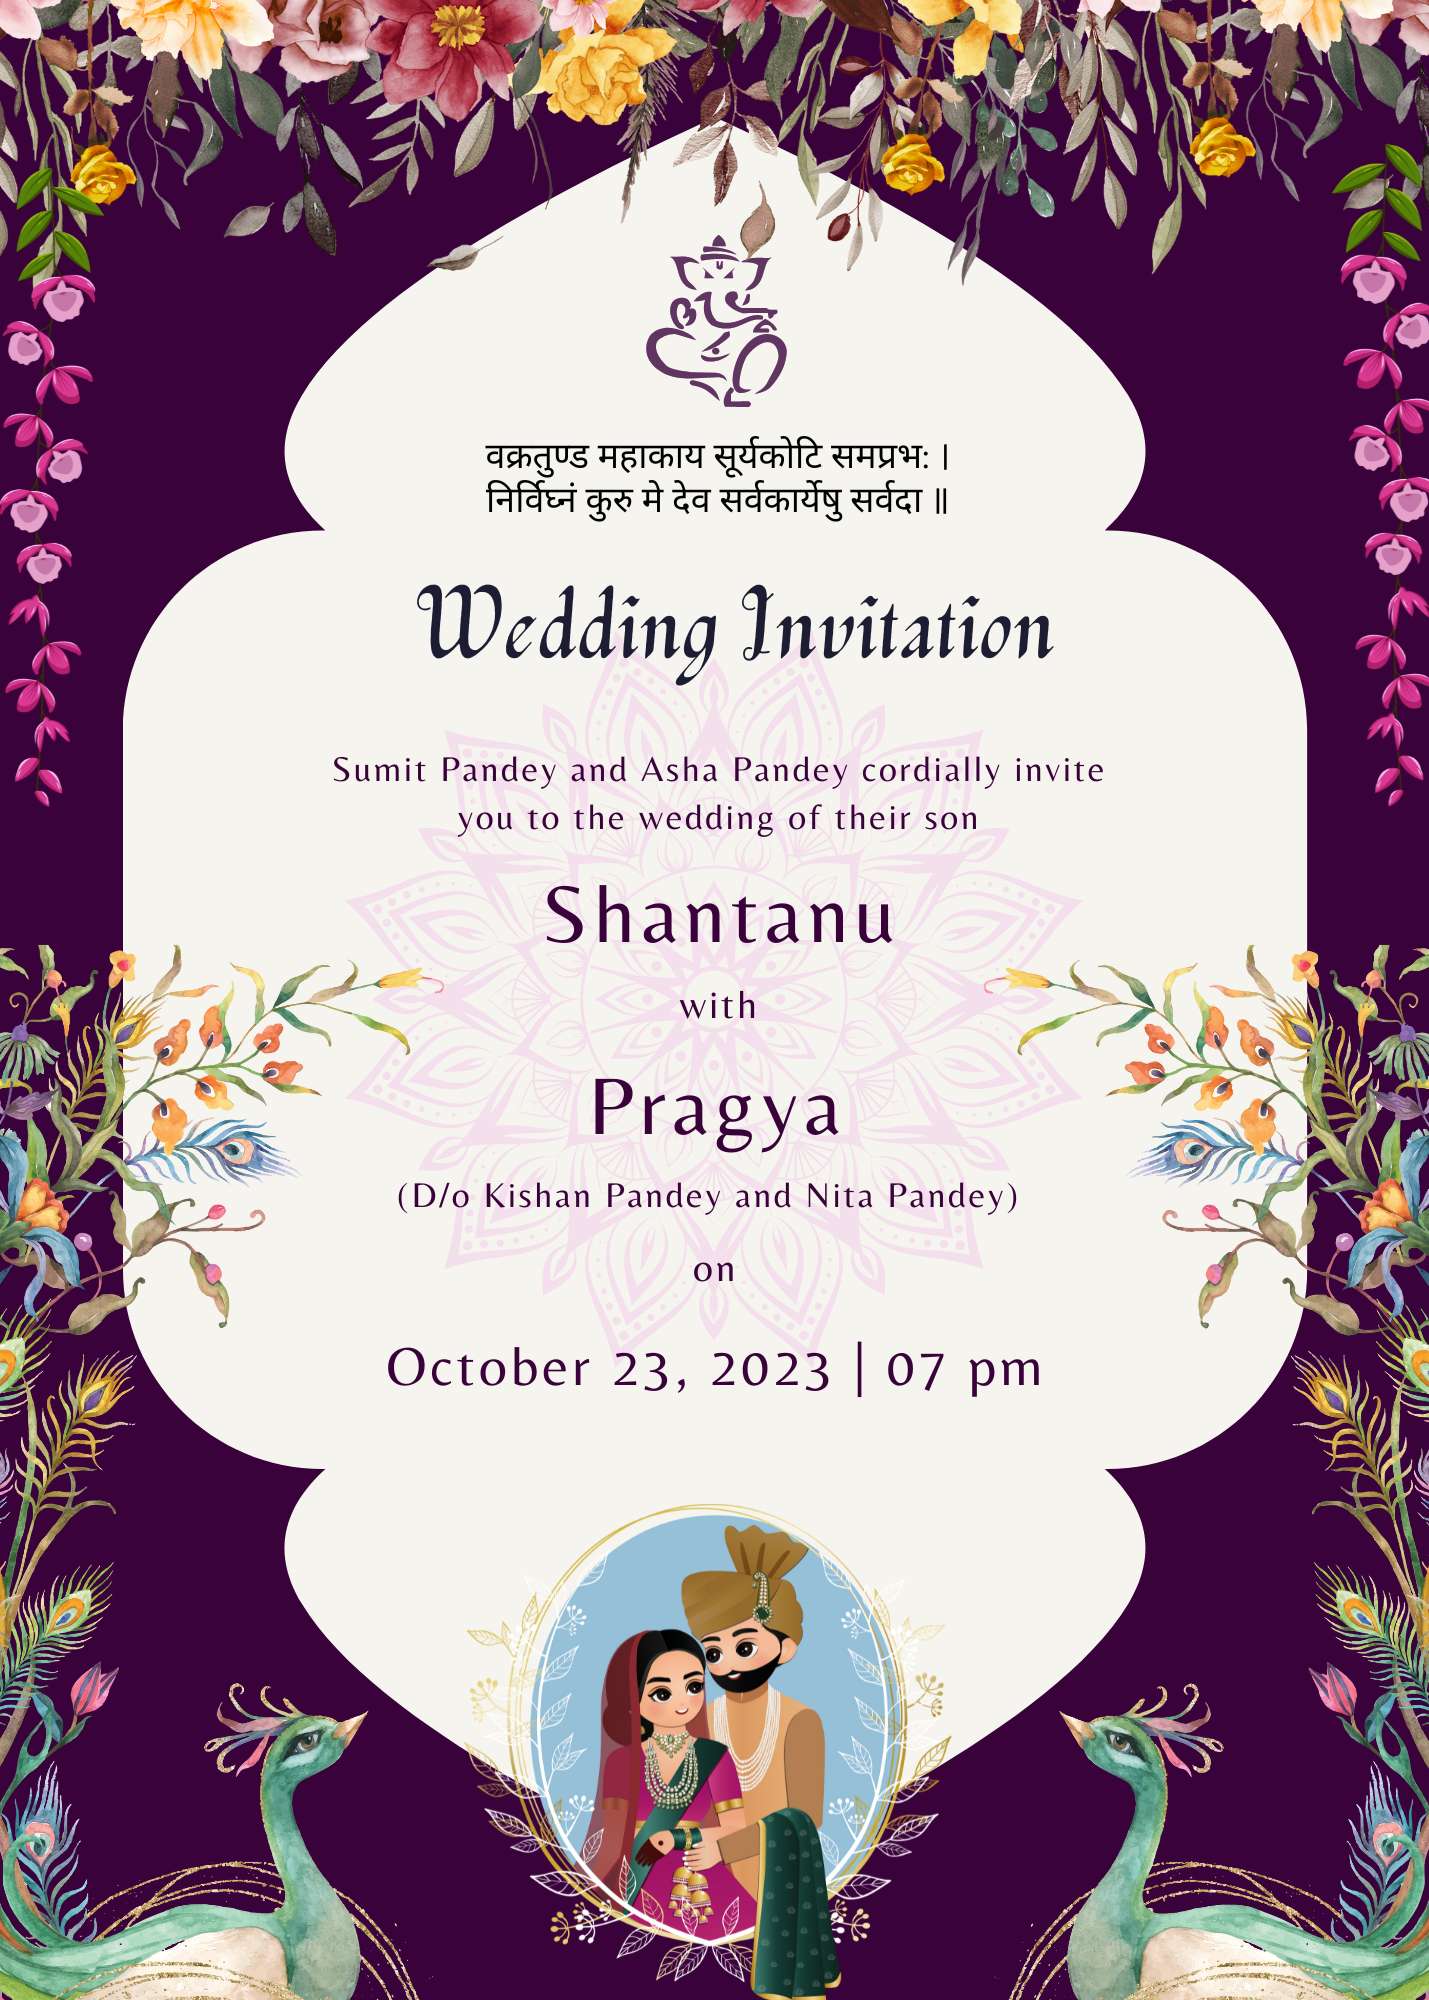 indian wedding invitation templates